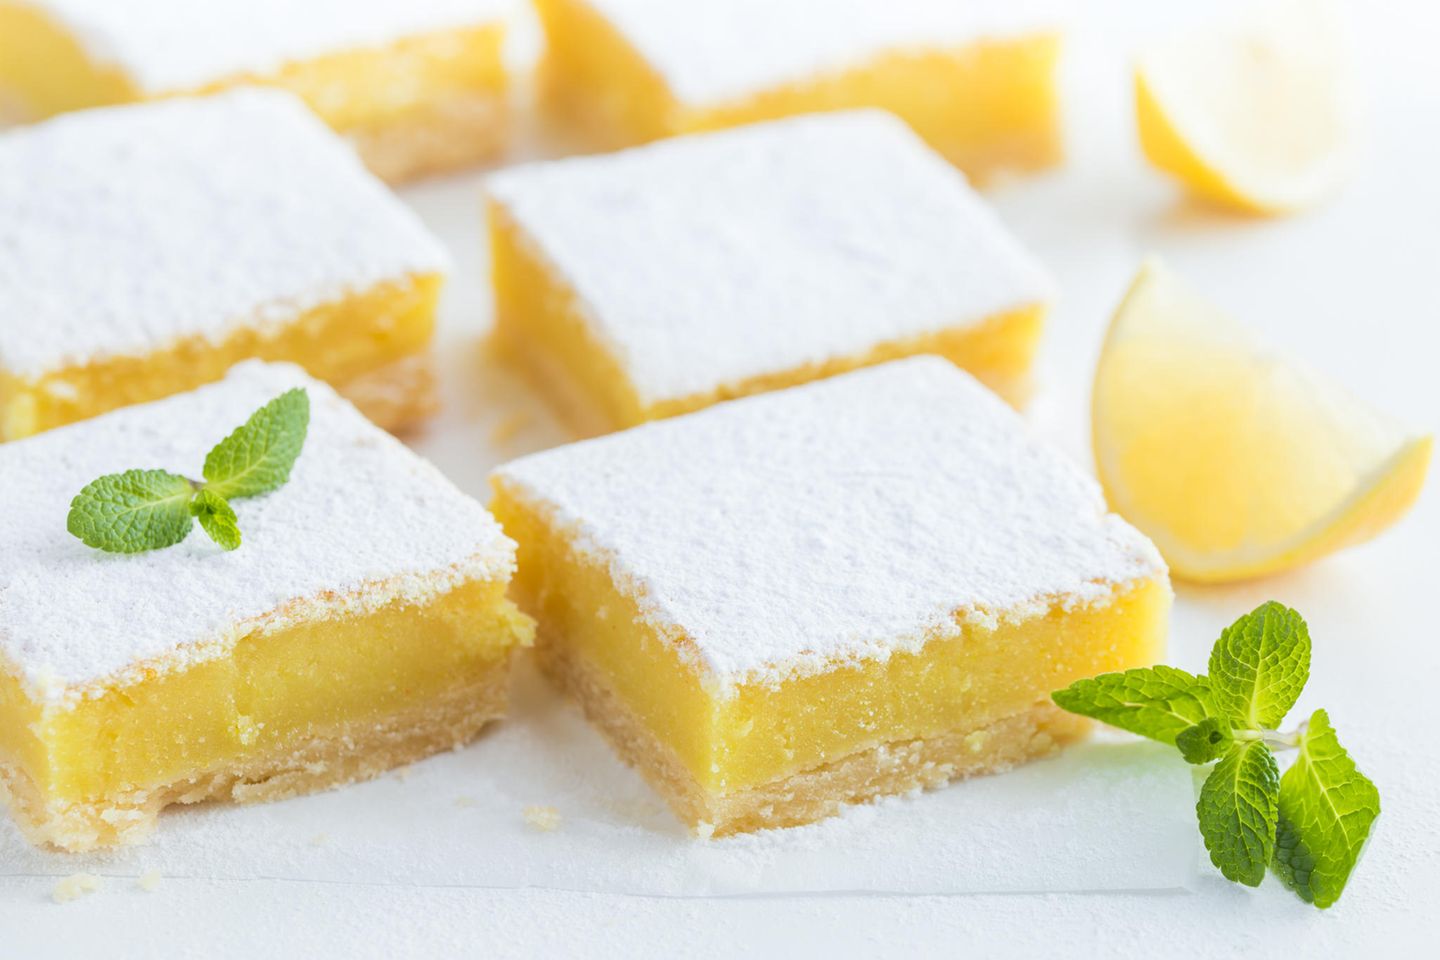 A divine treat: lemon tart arranged on a white tablecloth